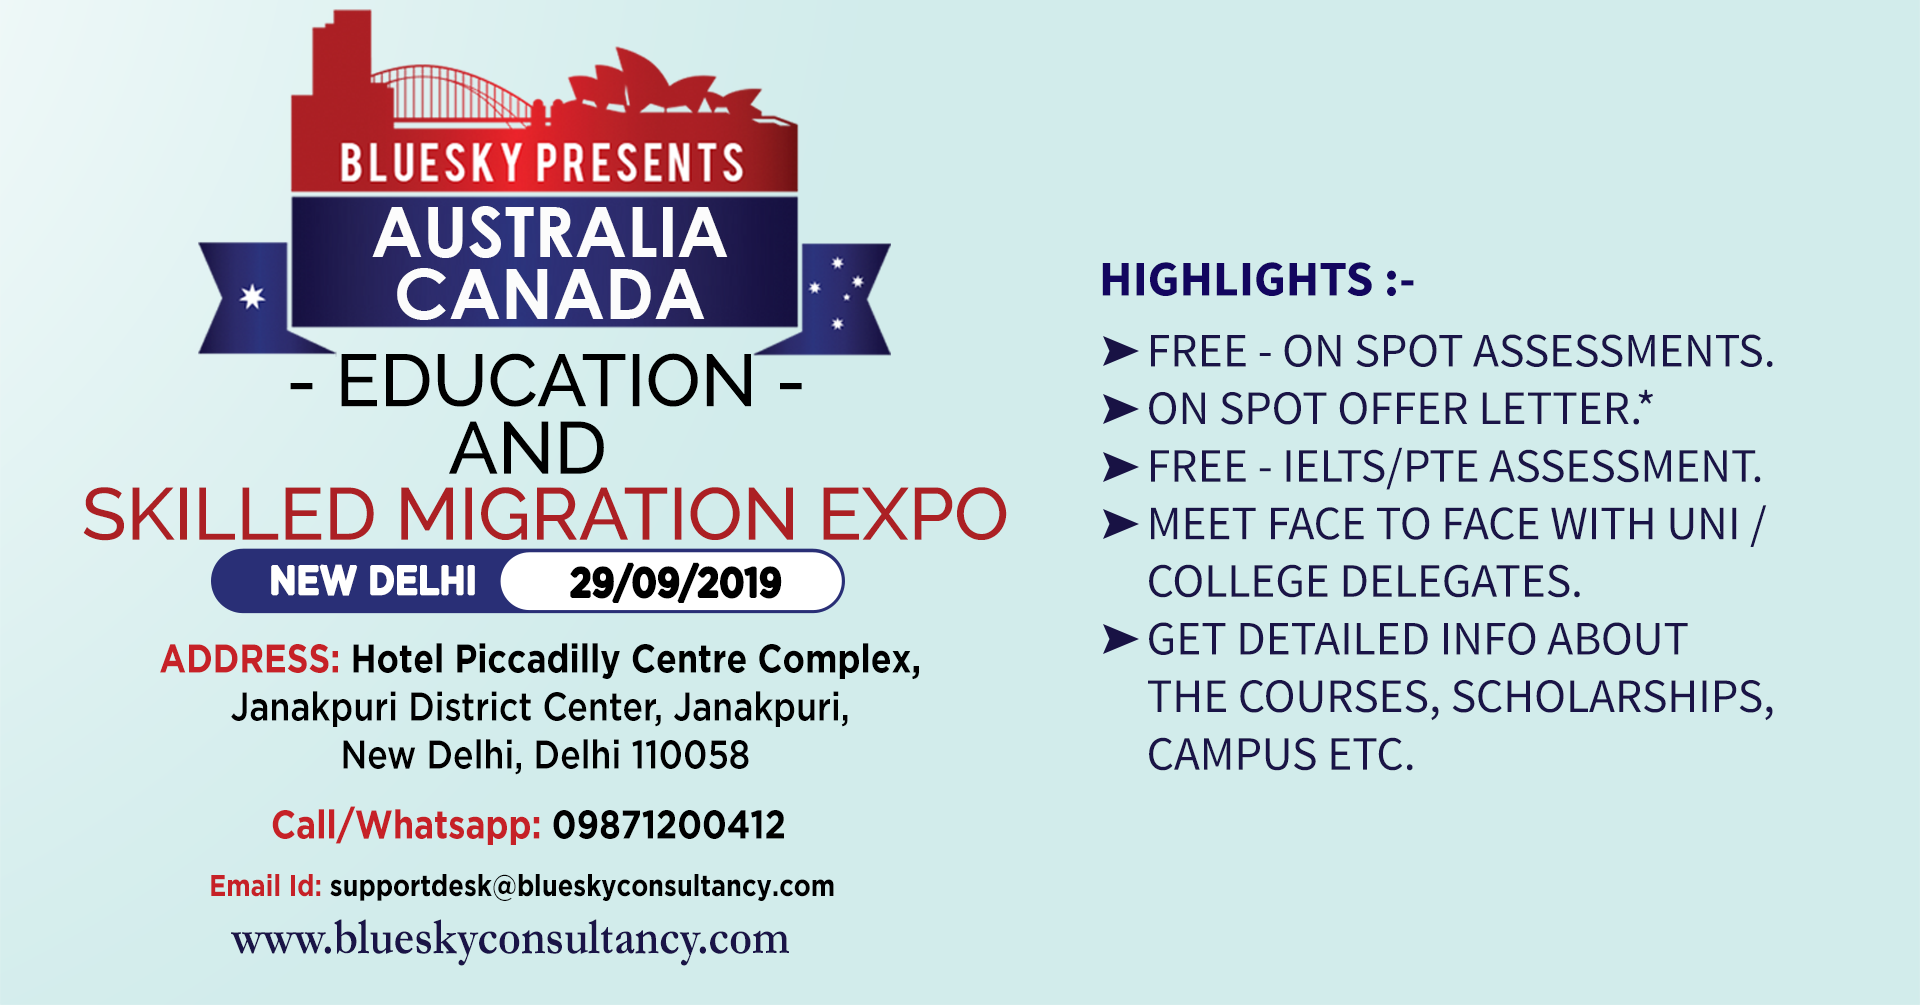 Australia and Canada Education And Skilled Migration Expo 2019, New Delhi, Delhi, India